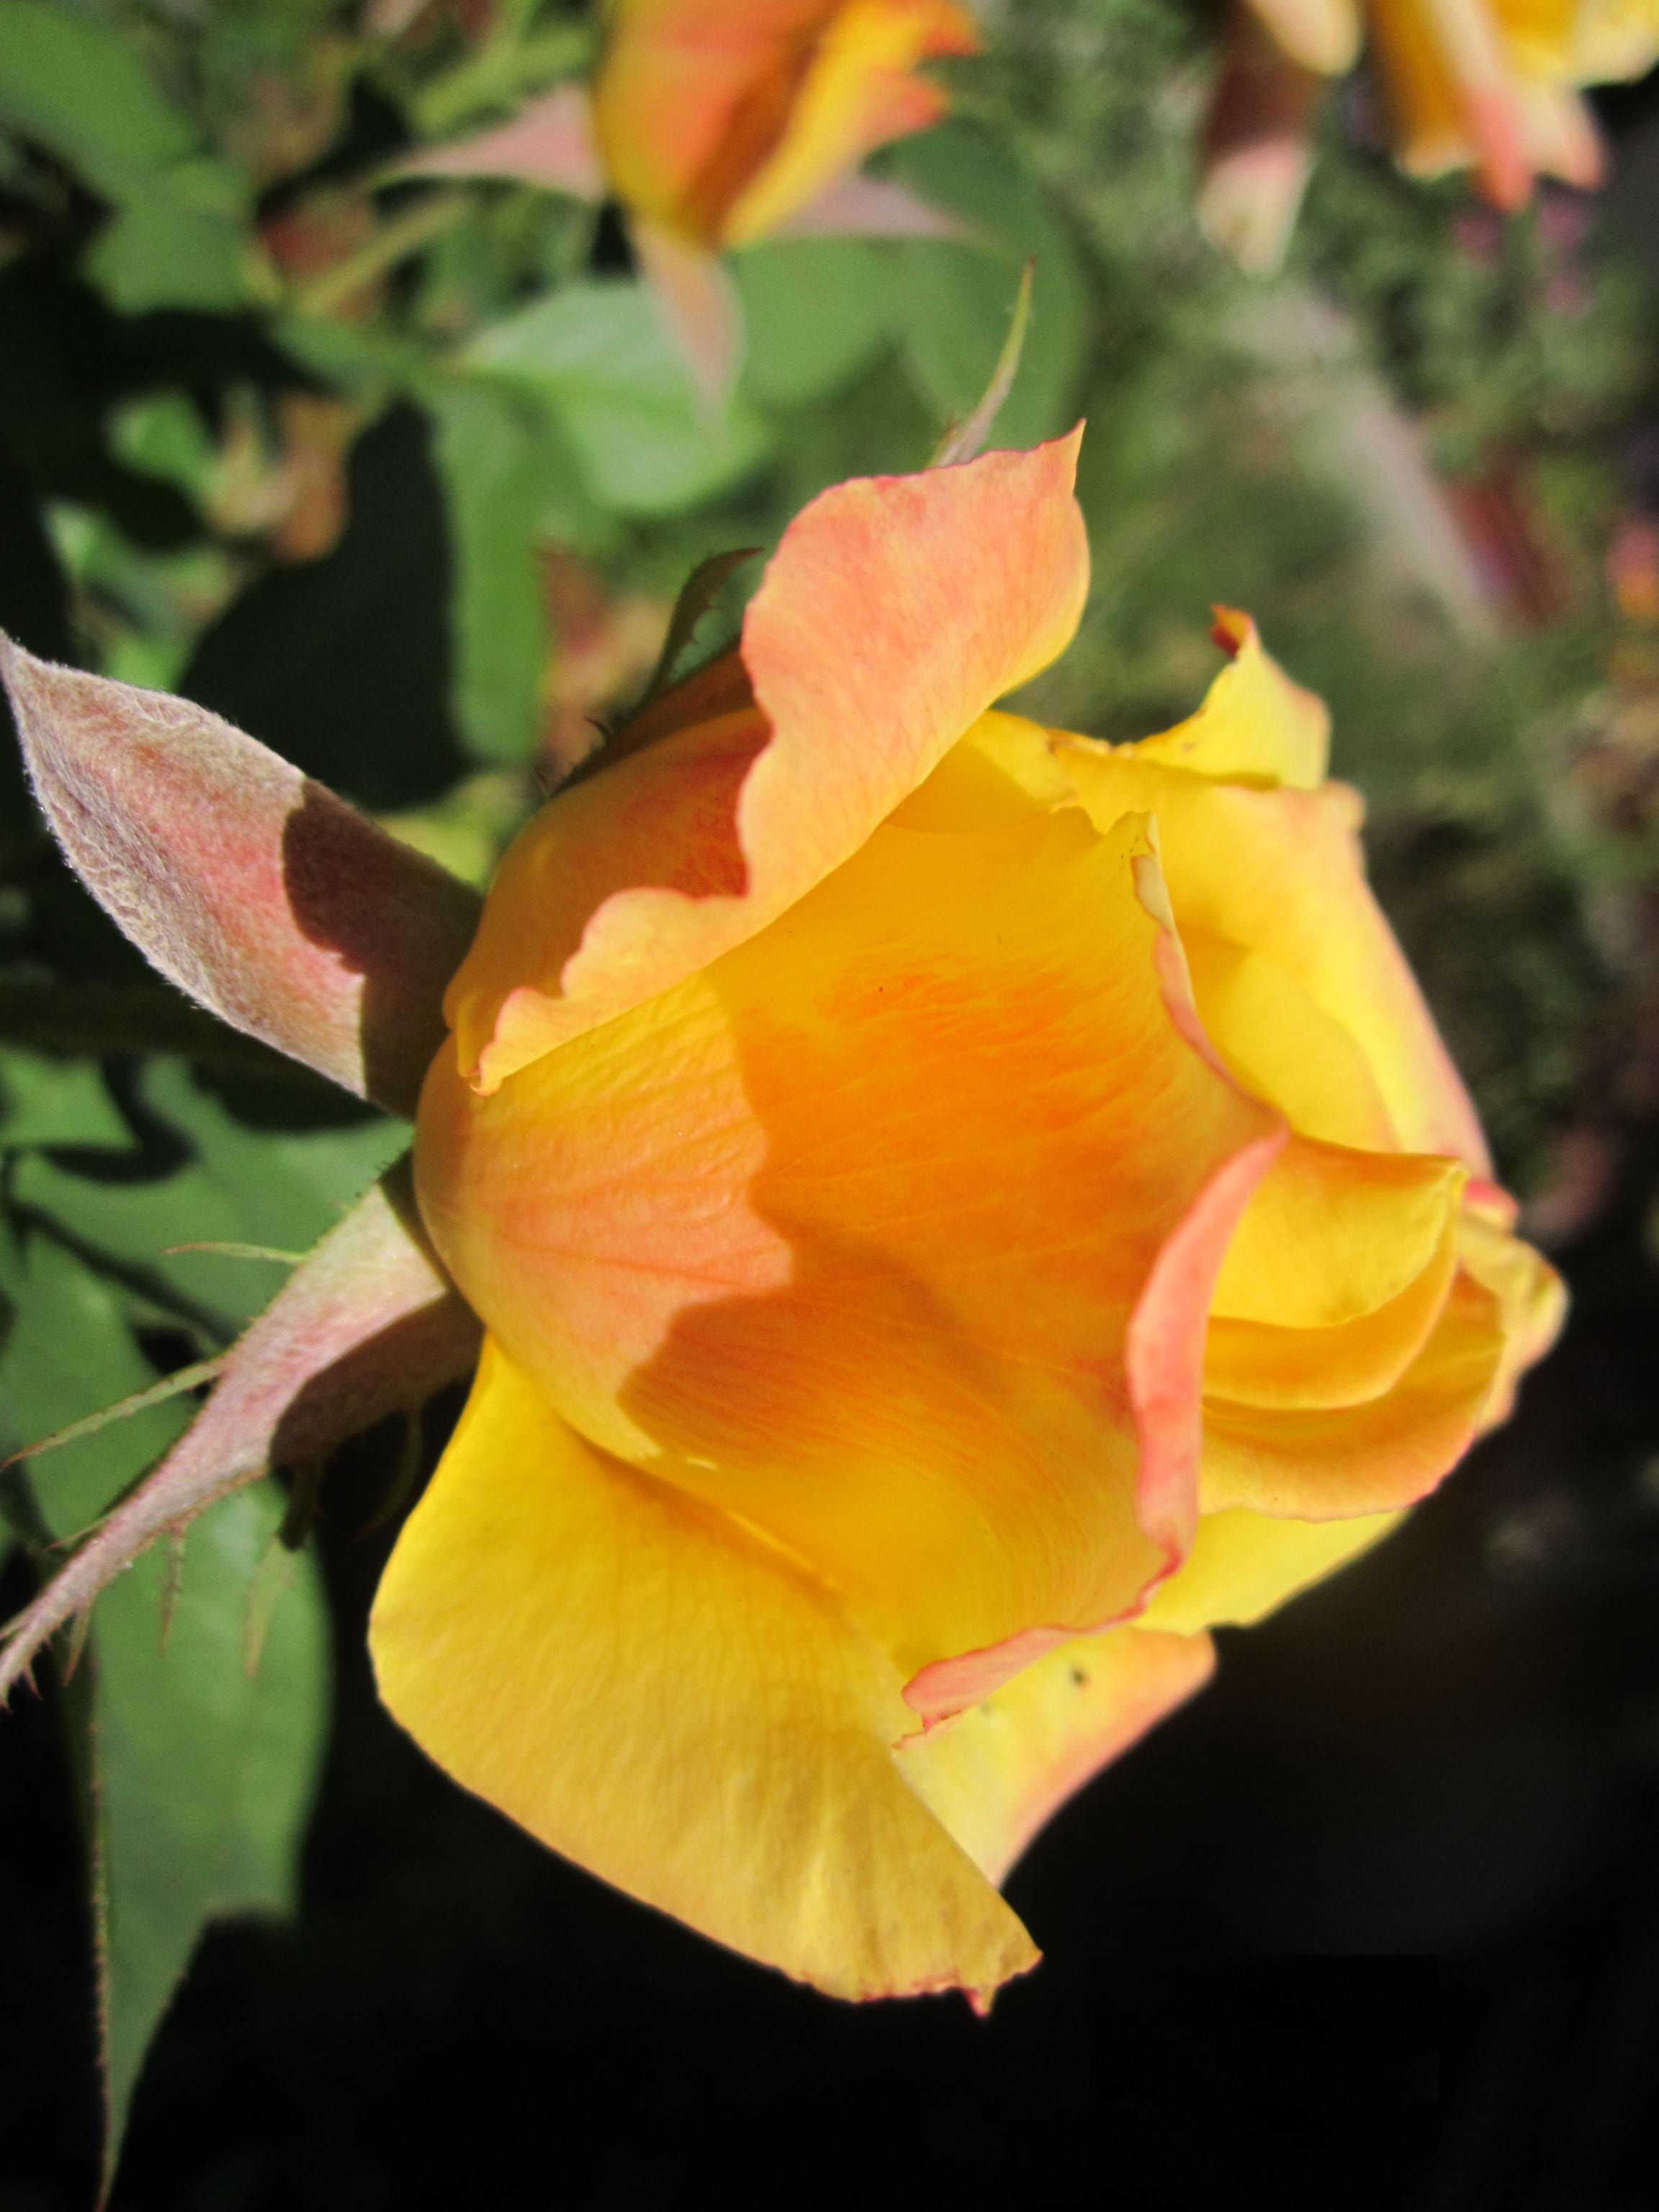 Роза мохана фото и описание